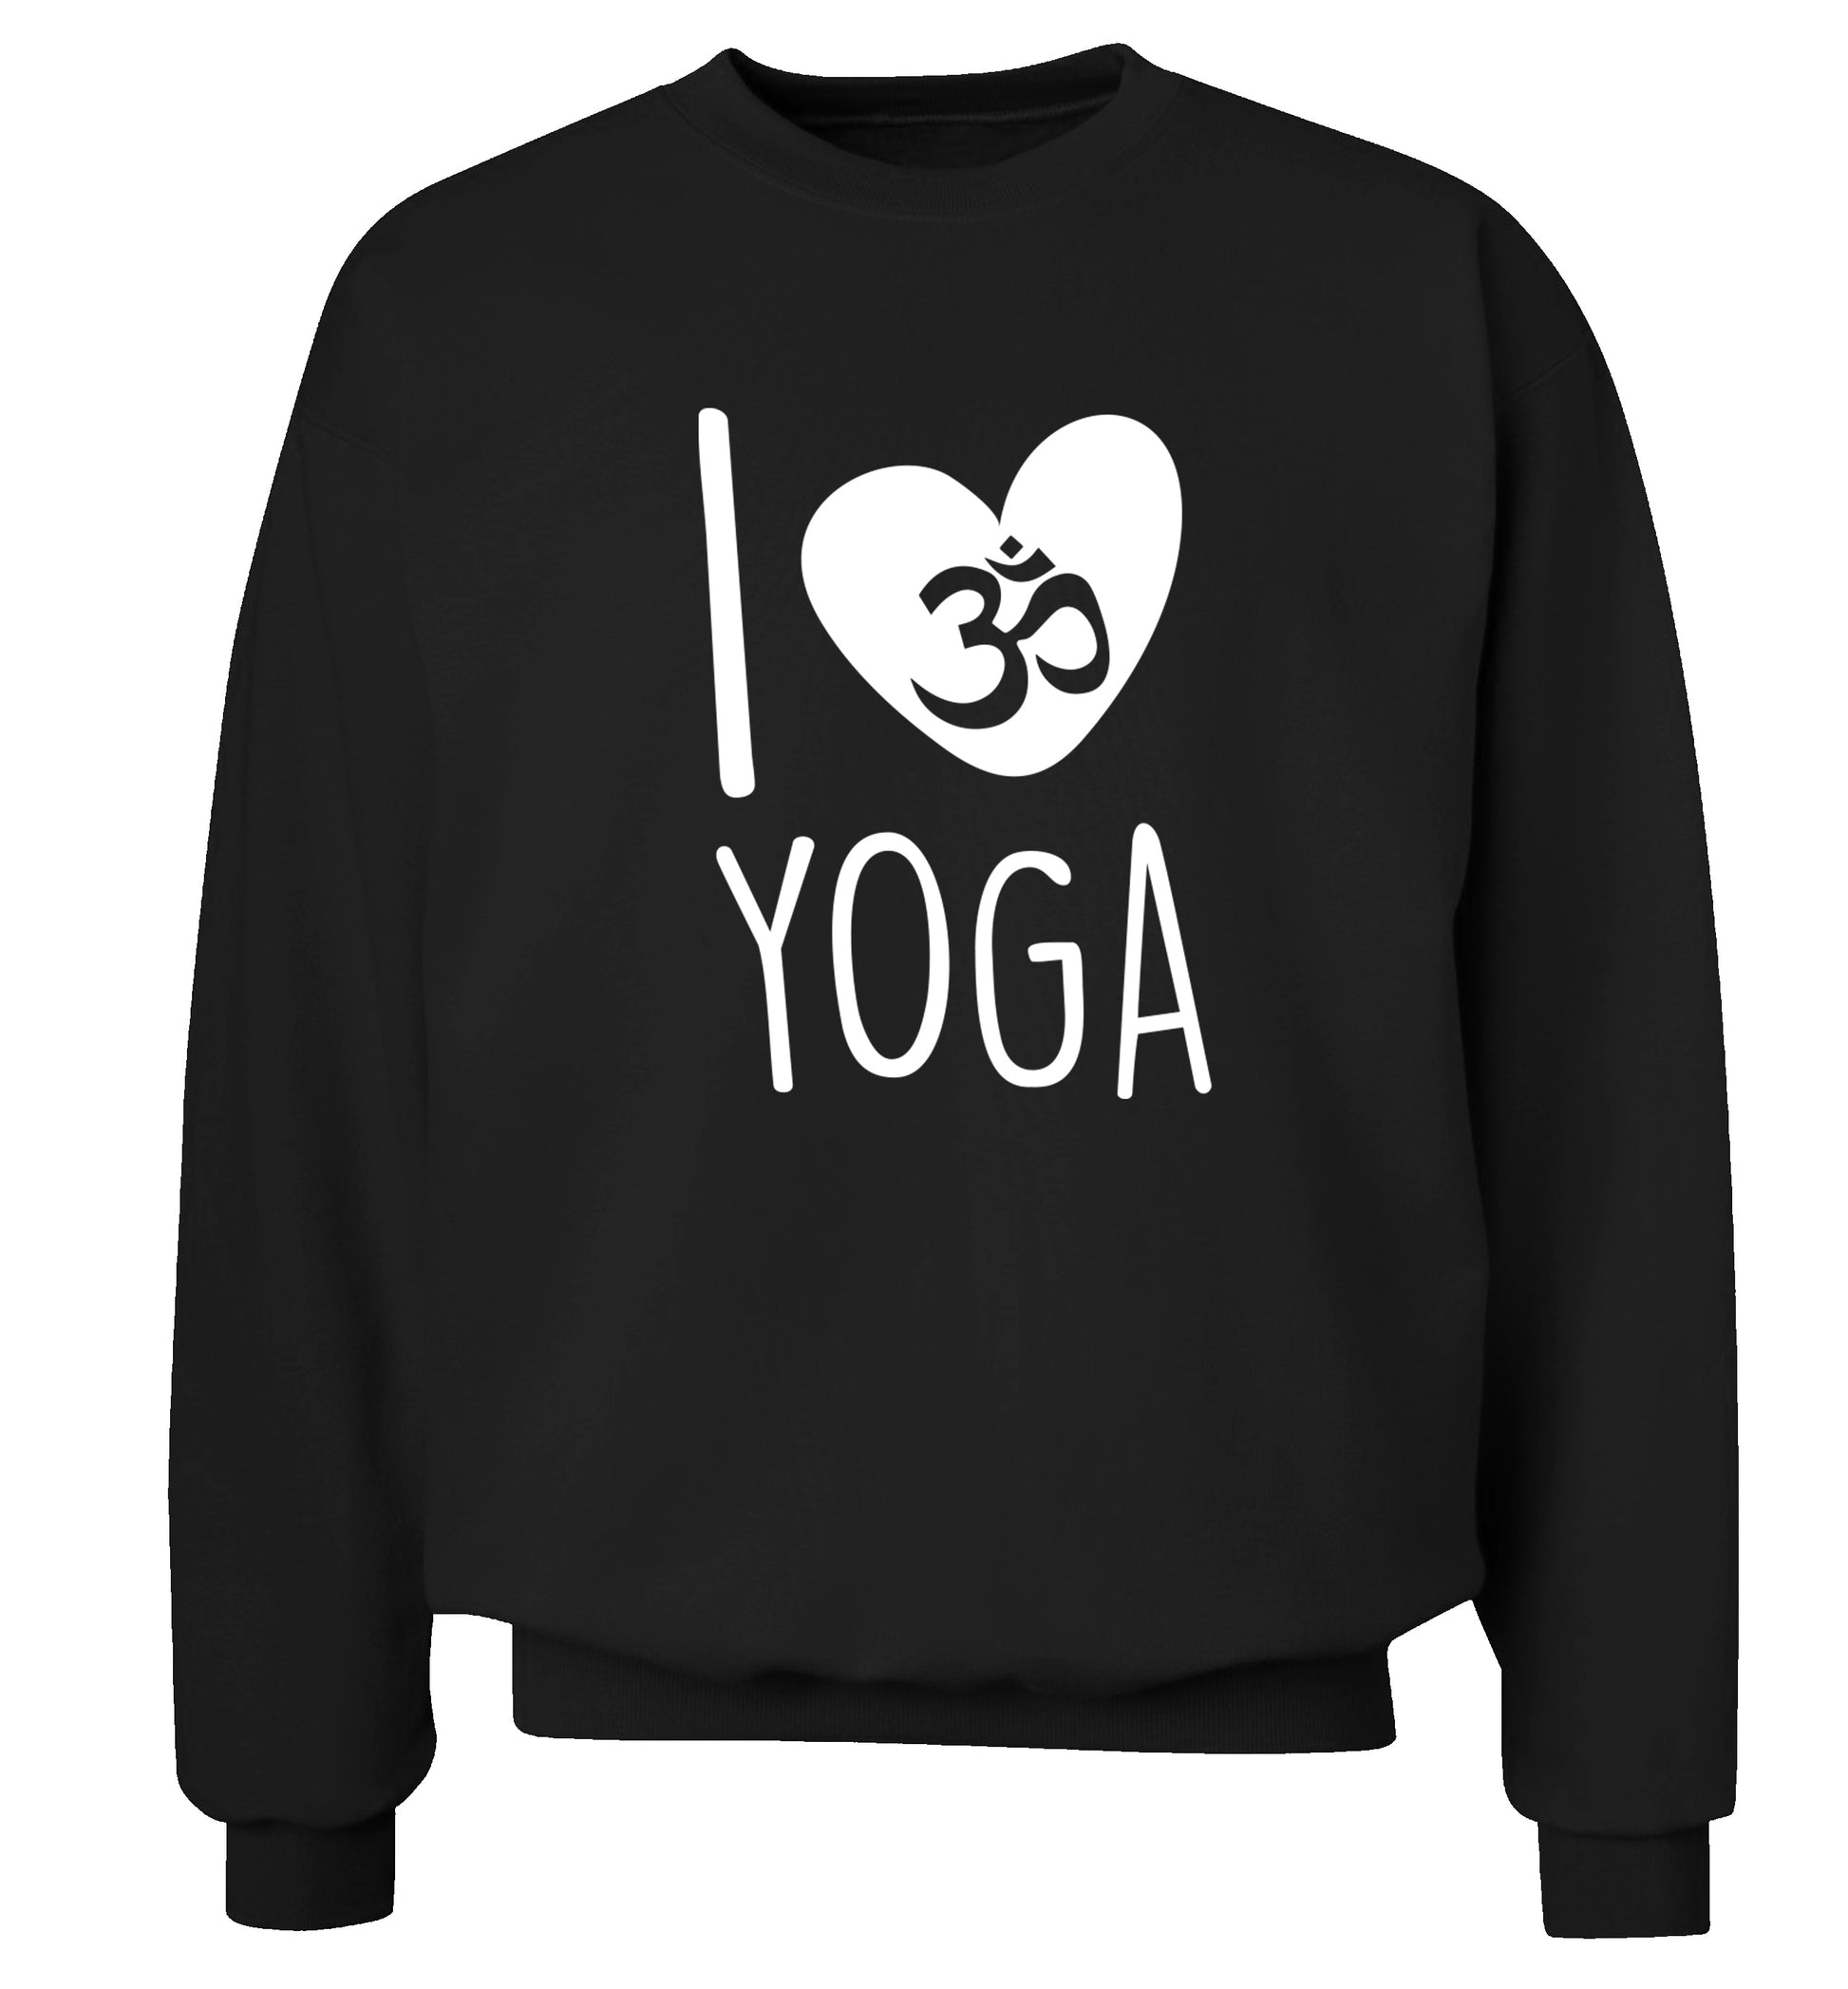 I love yoga Adult's unisex black Sweater 2XL